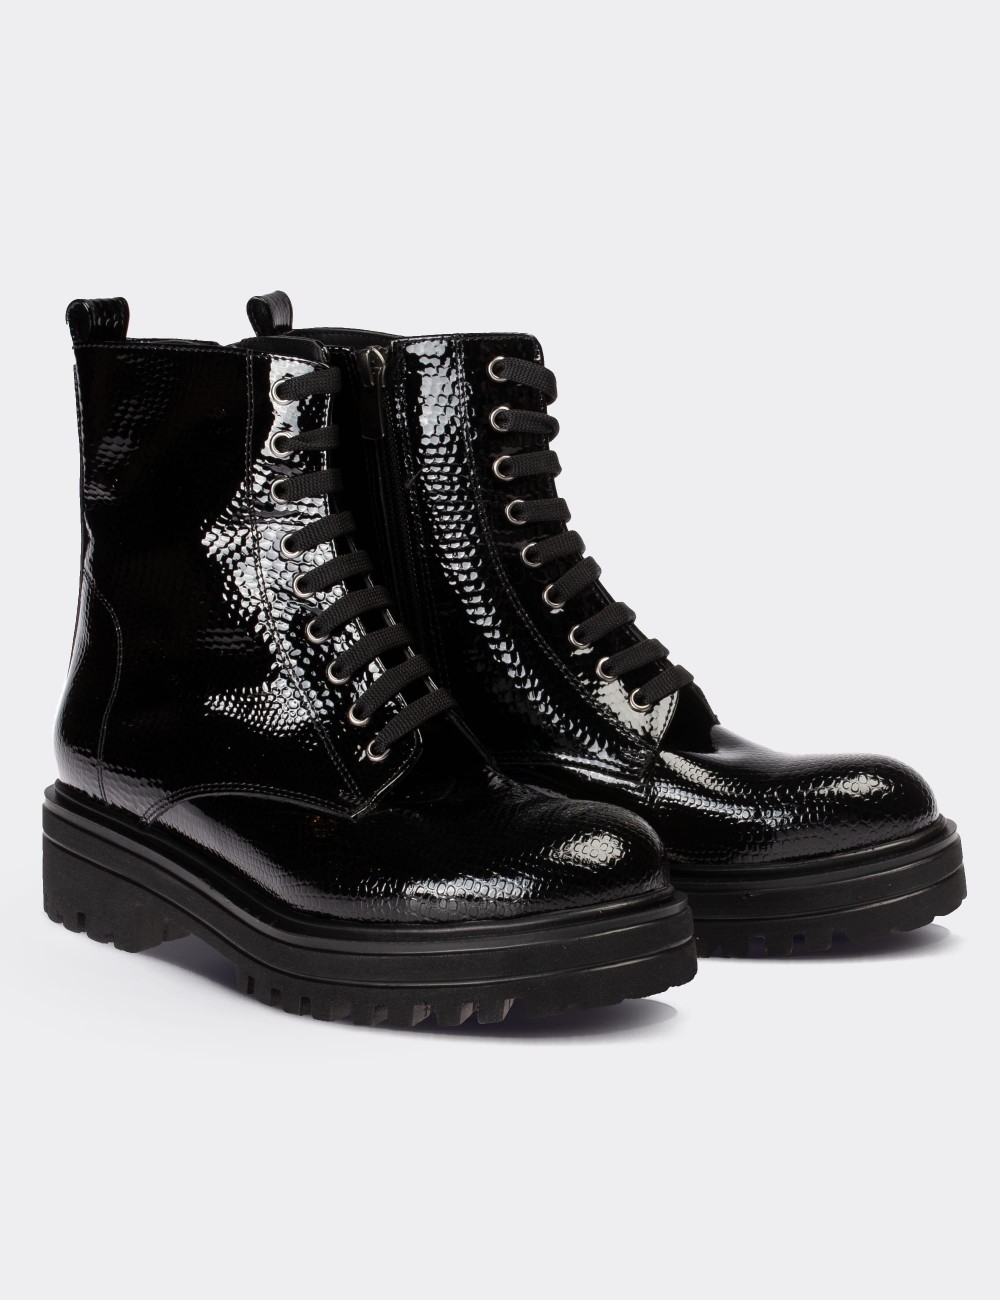 Black Patent Leather Postal Boots - 01814ZSYHE02